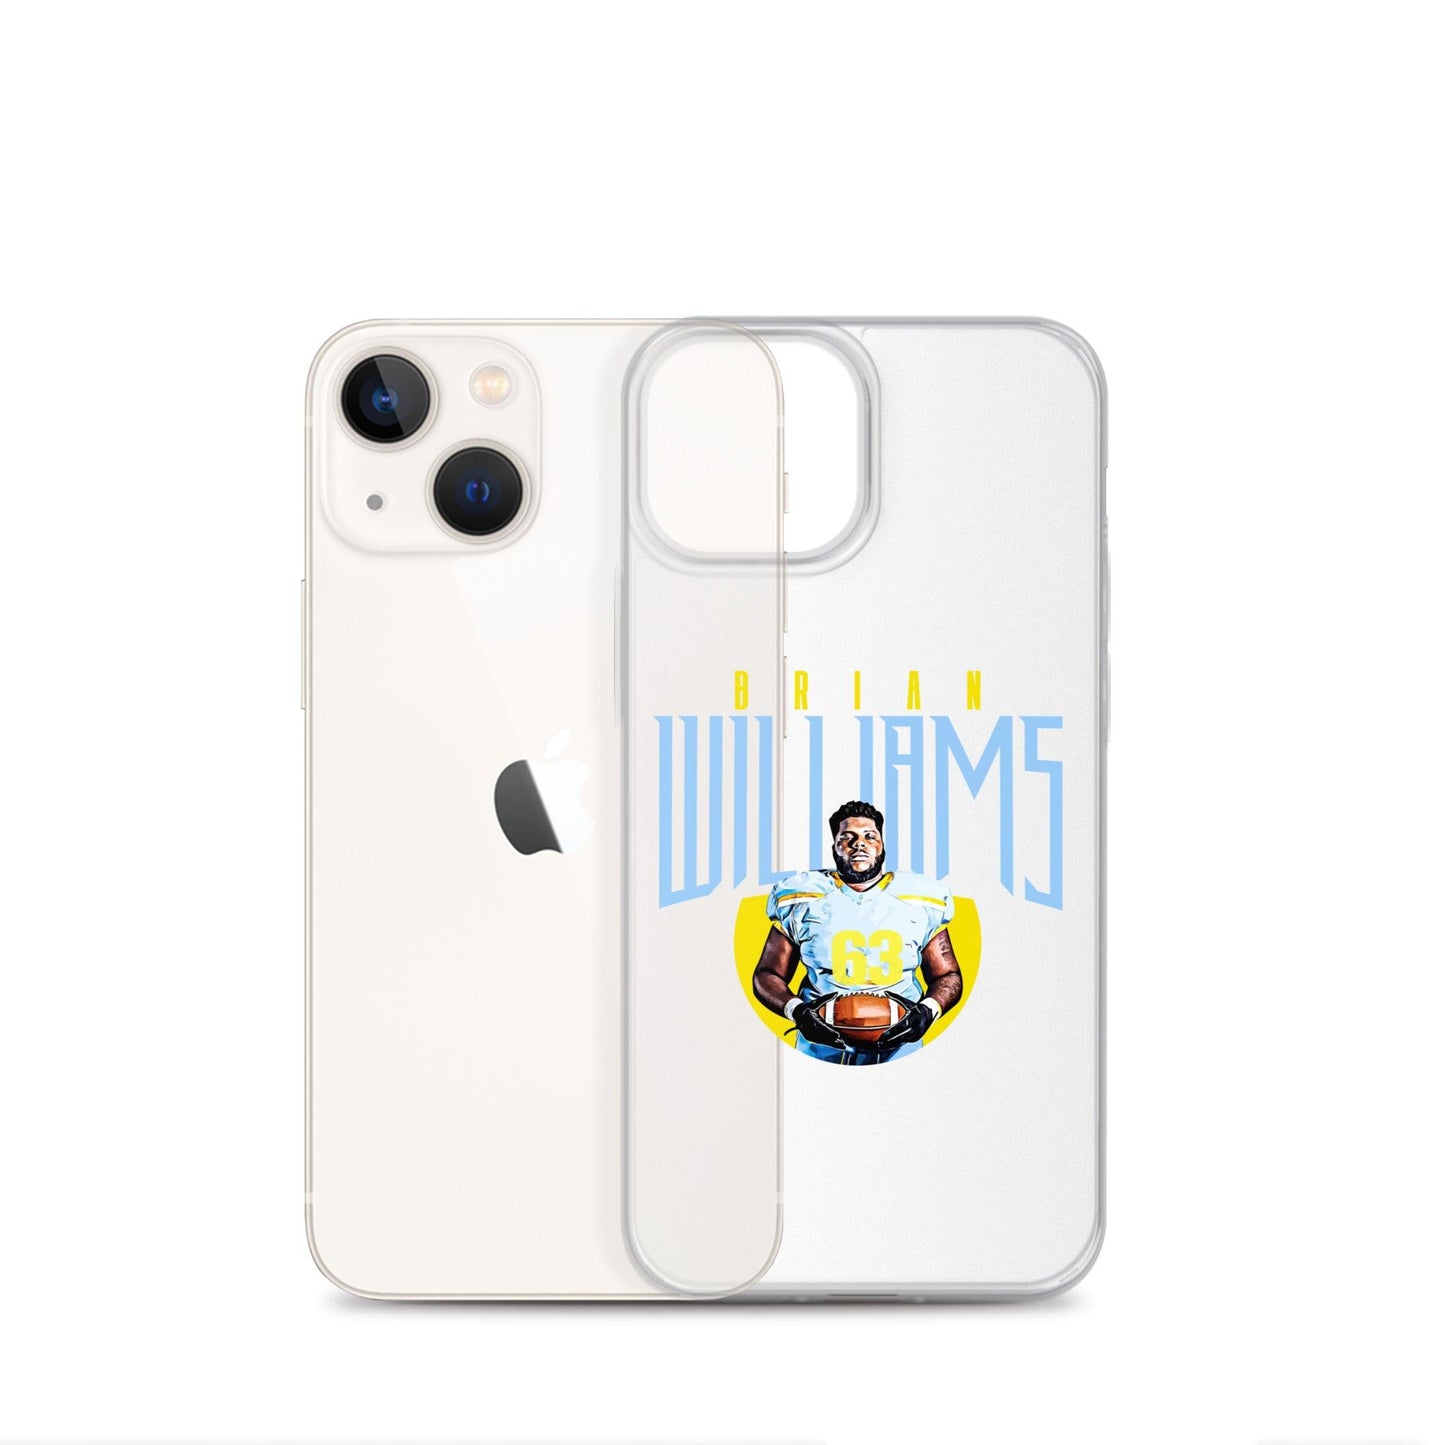 Brian Williams "Gameday" iPhone Case - Fan Arch